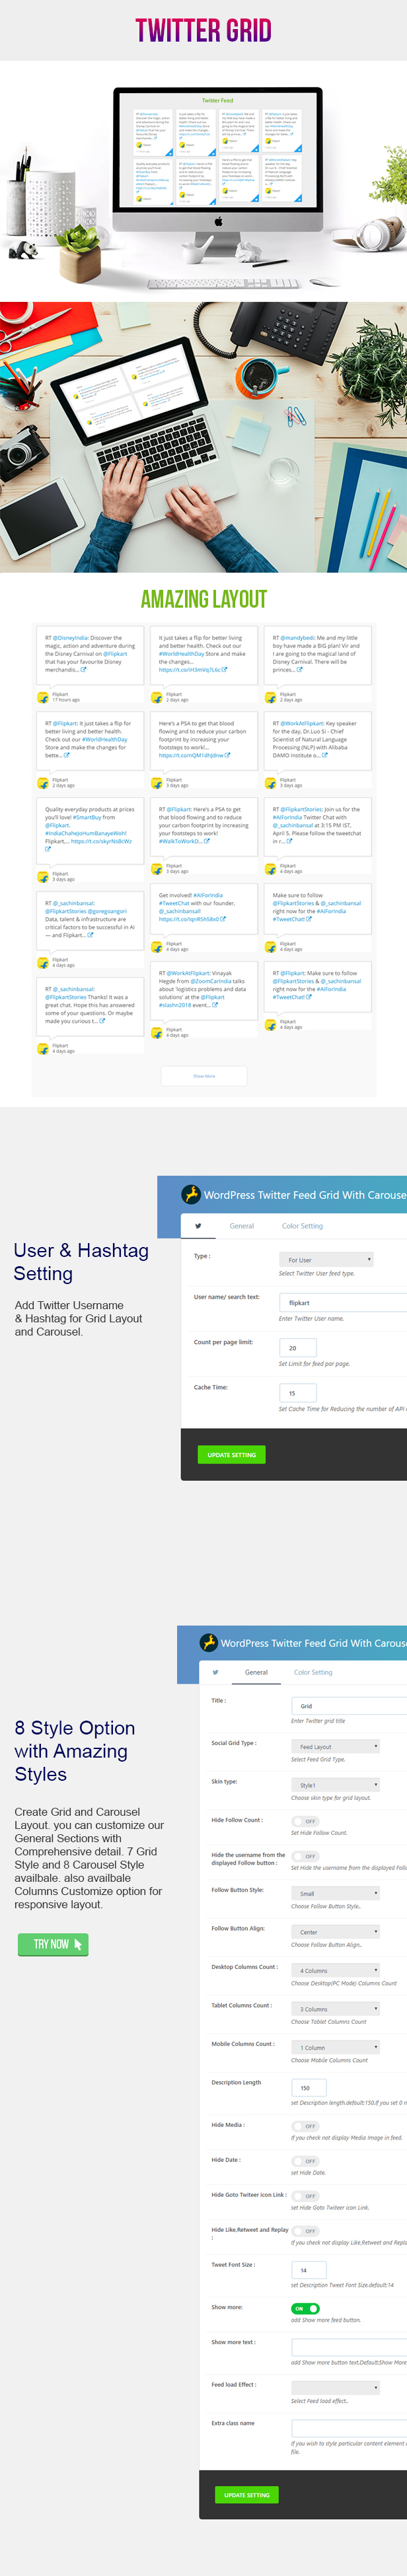 WordPress - Twitter Feed Stream Grid With Carousel